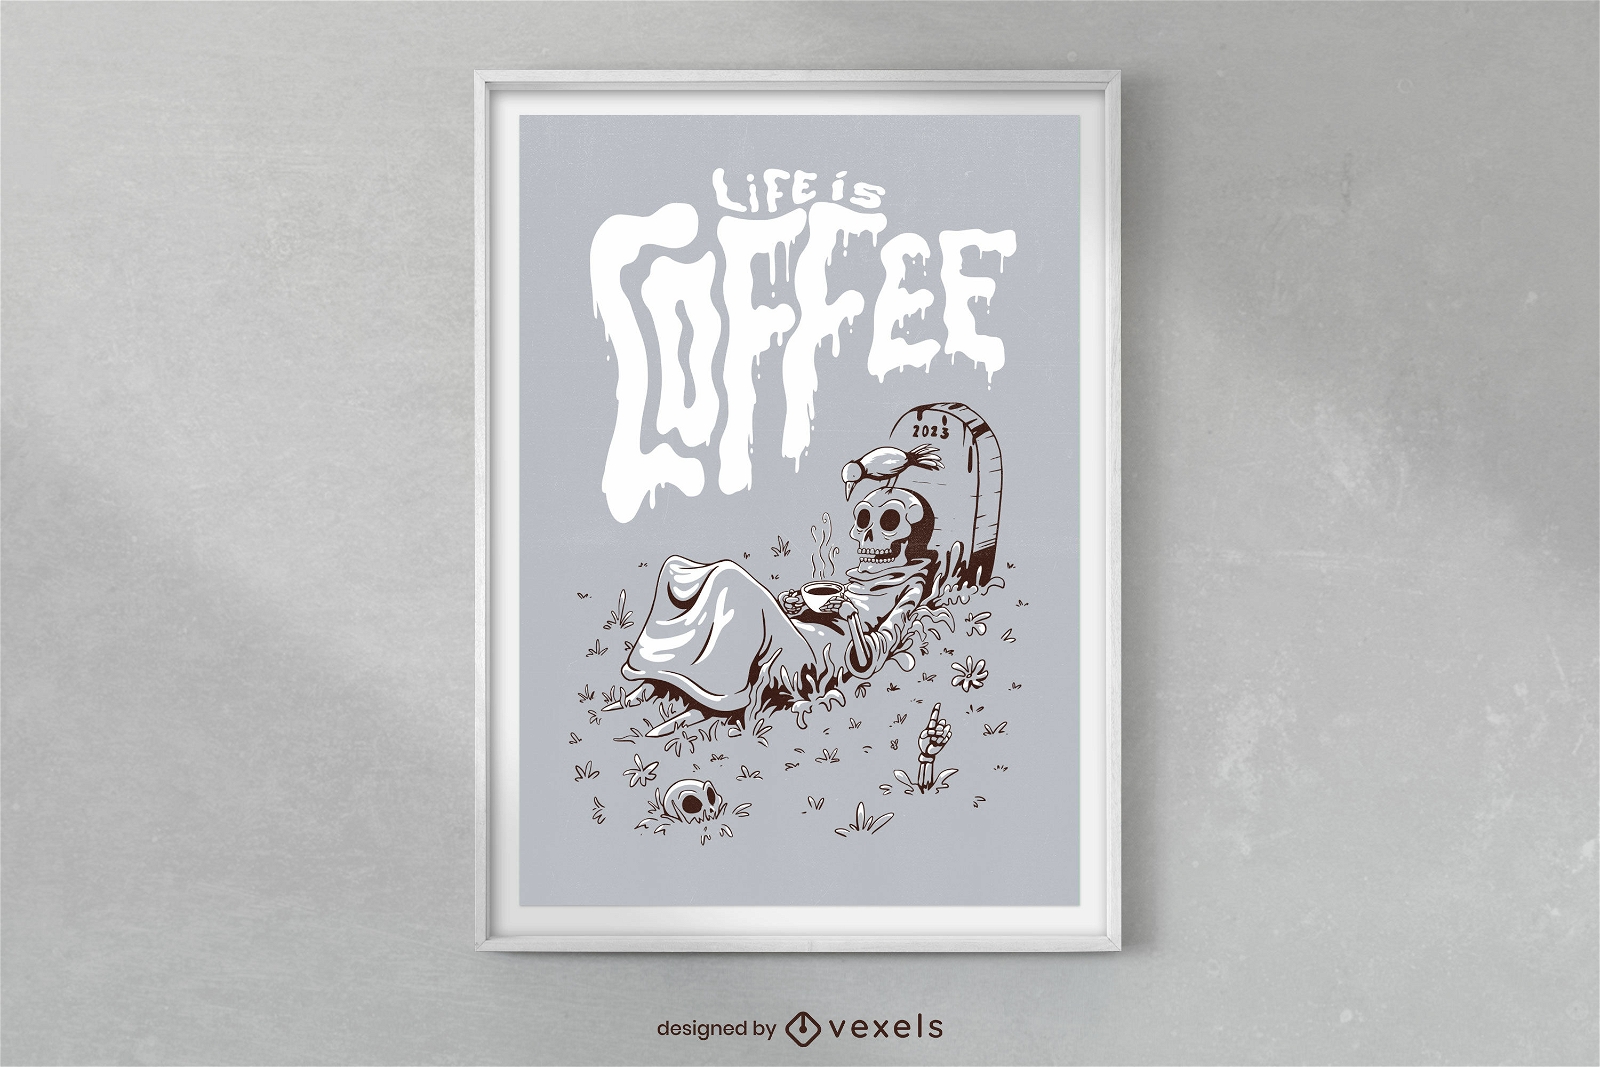 Skeleton drinking coffee poster design